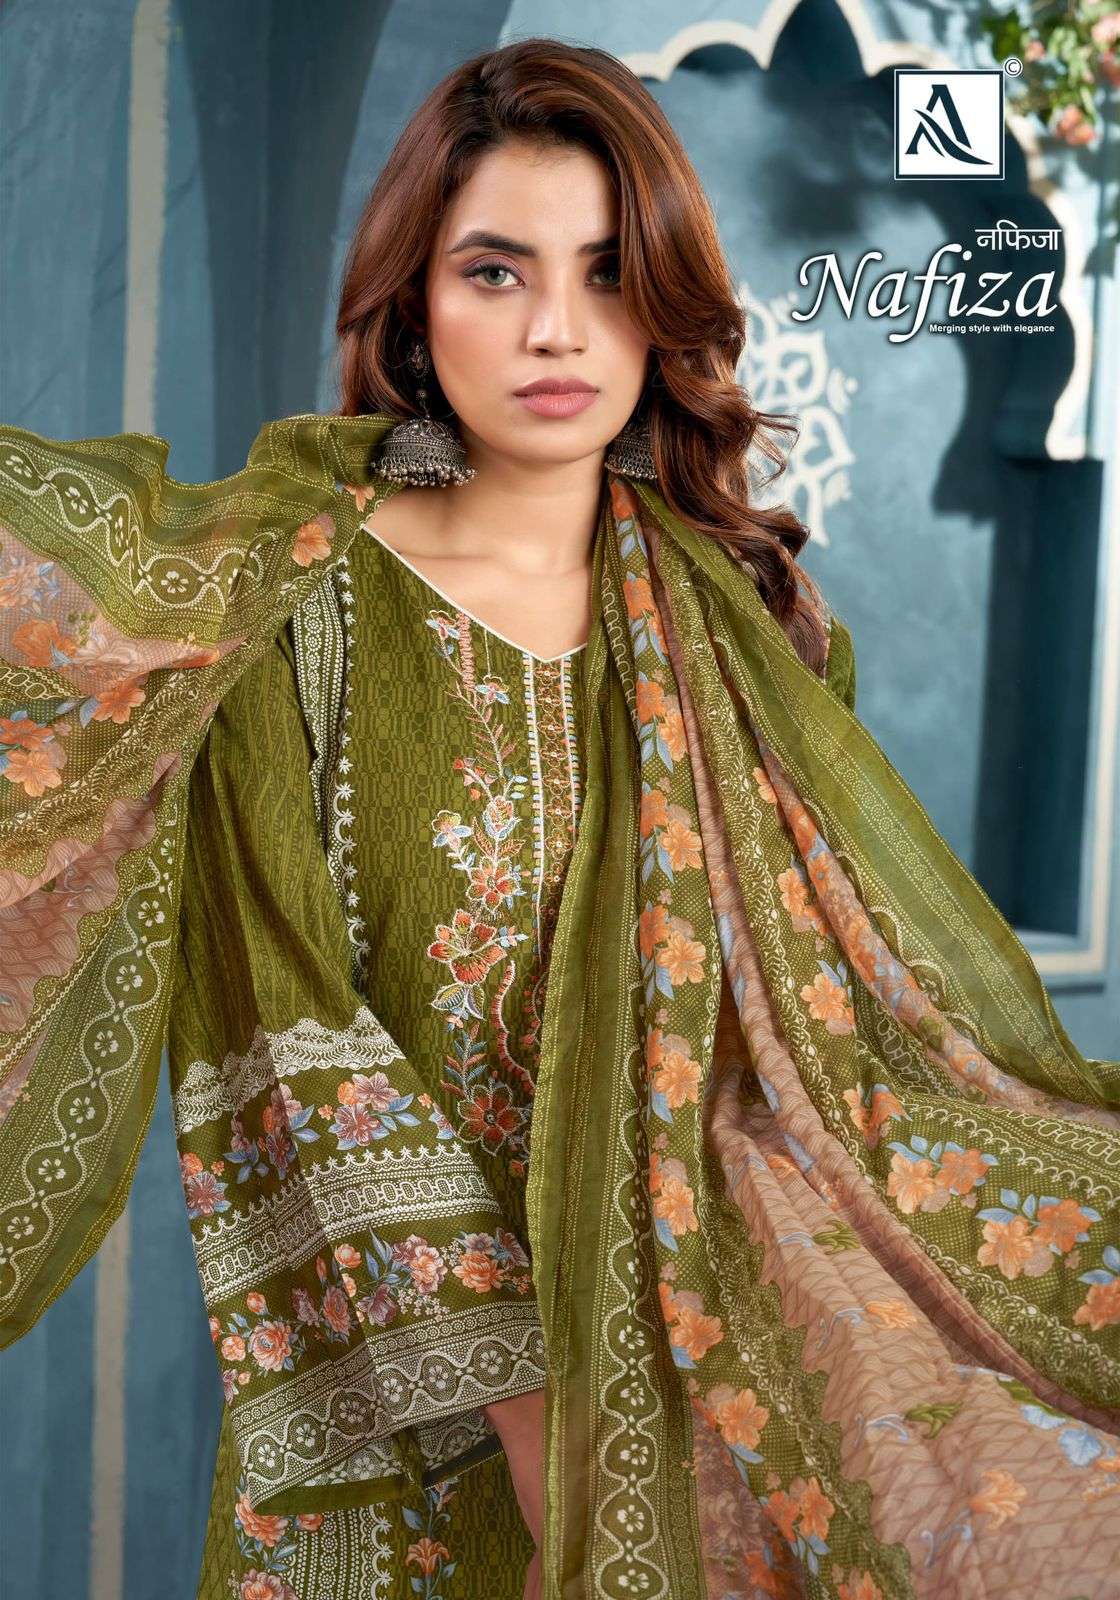 nafiza by alok suit pakistani print designer salwar suits catalogue wholesale price surat gujarat 